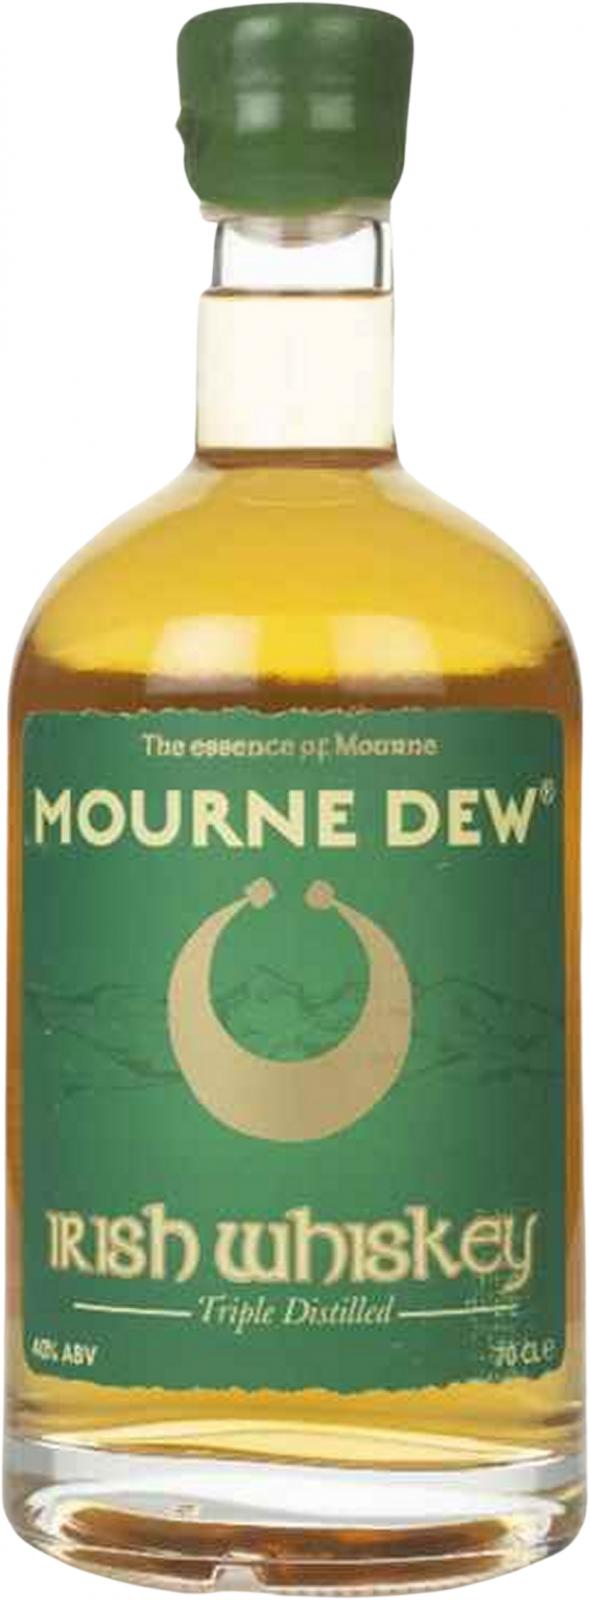 Mourne Dew Irish Whiskey